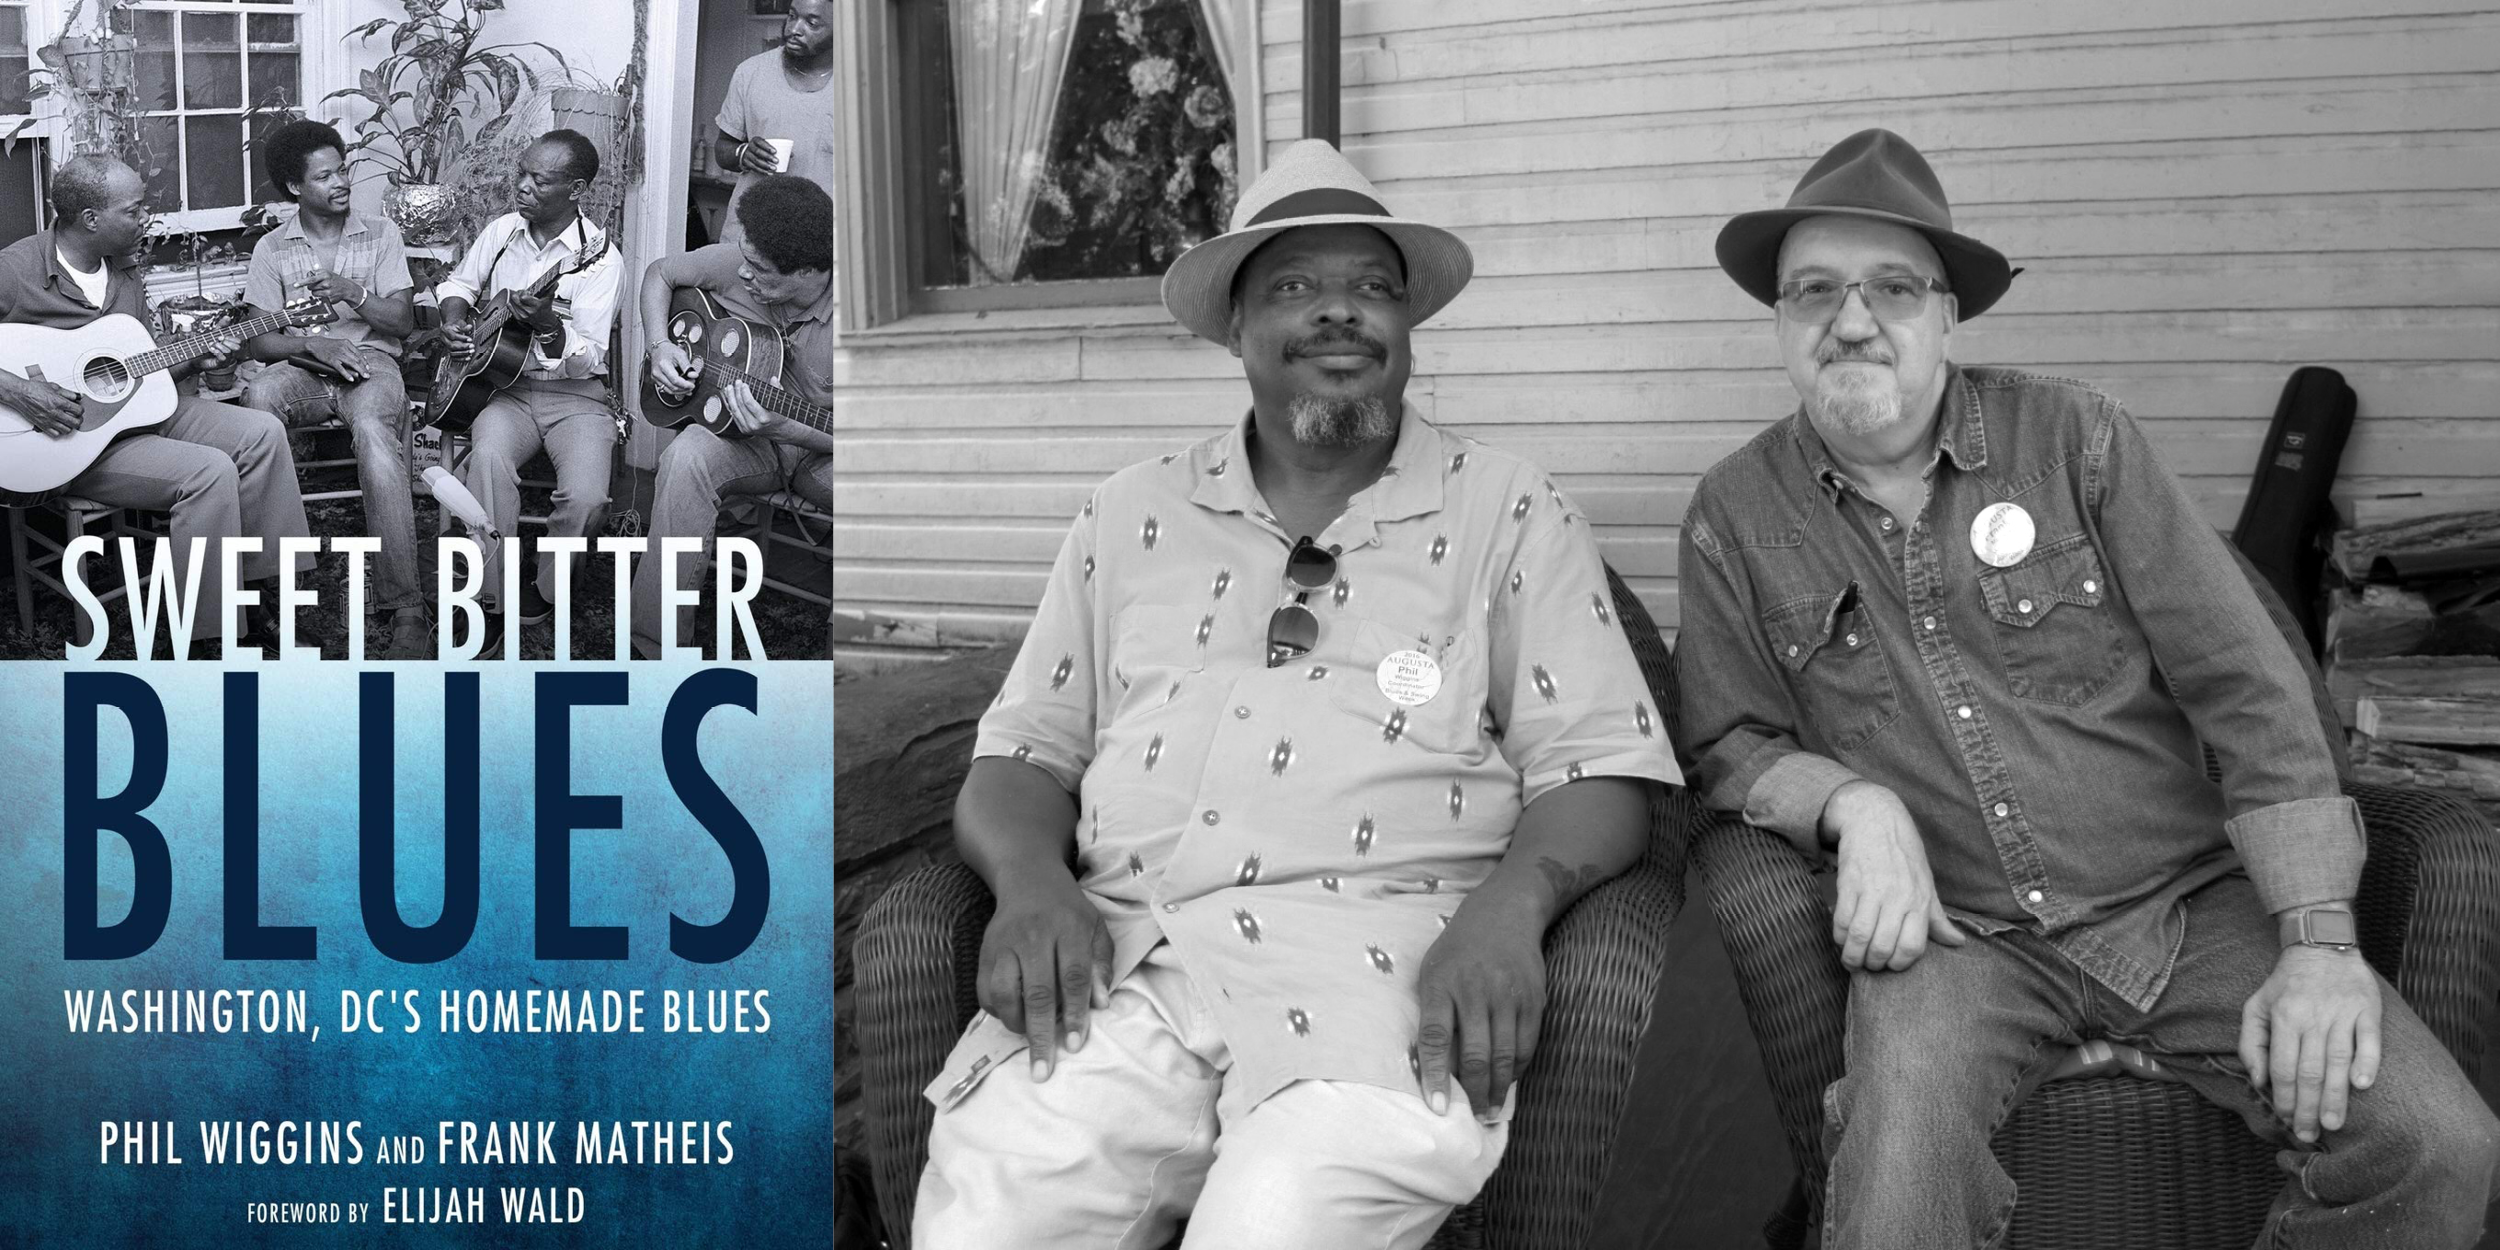 Frank Matheis & Phil Wiggins - SWEET, BITTER BLUES